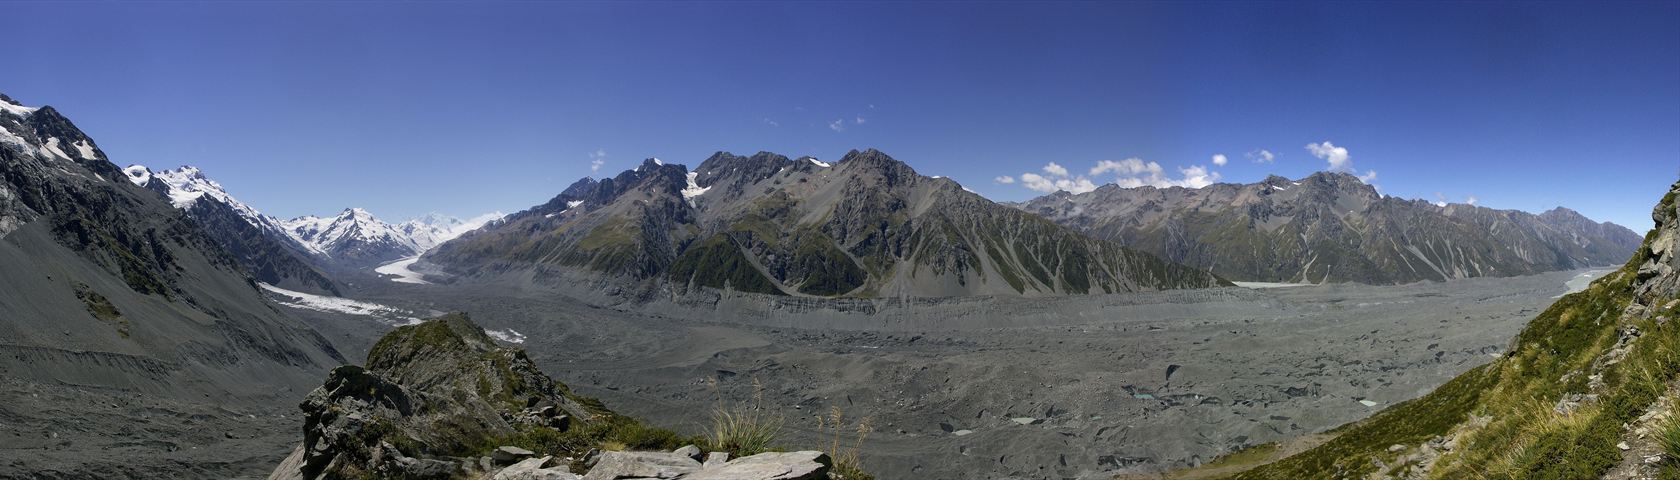 Mt. Cook and the Tasman Glacier